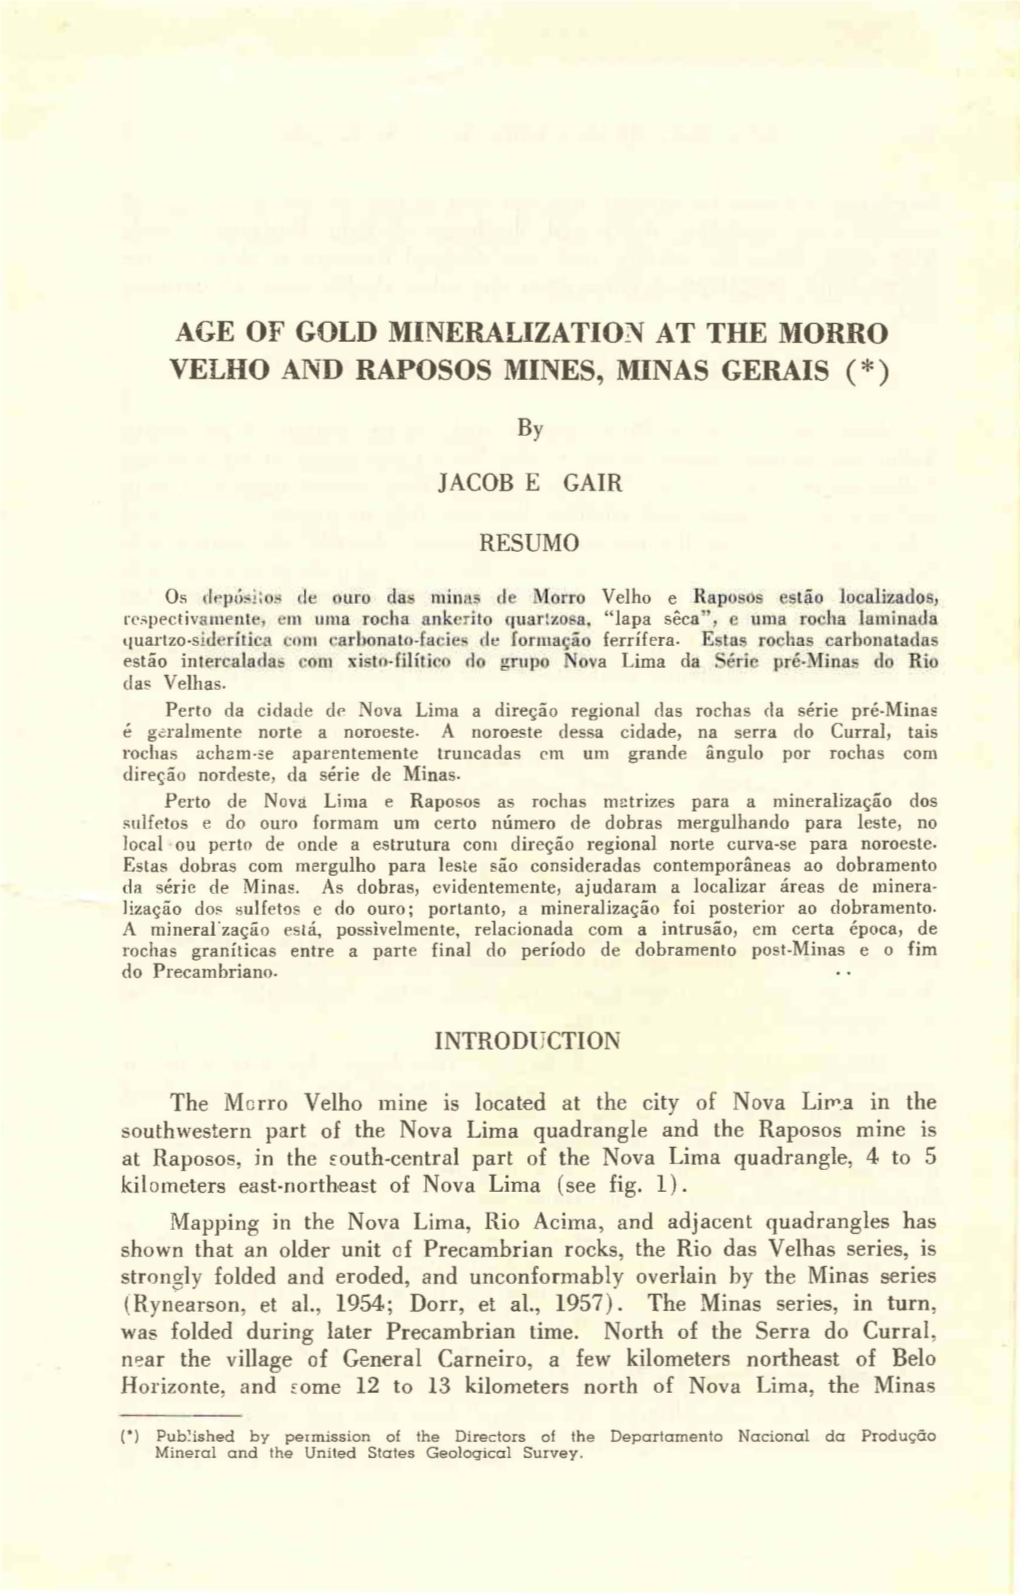 Age of Gold Mineralization at the Morro Velho and Raposos Mines, Minas Gerais (*)